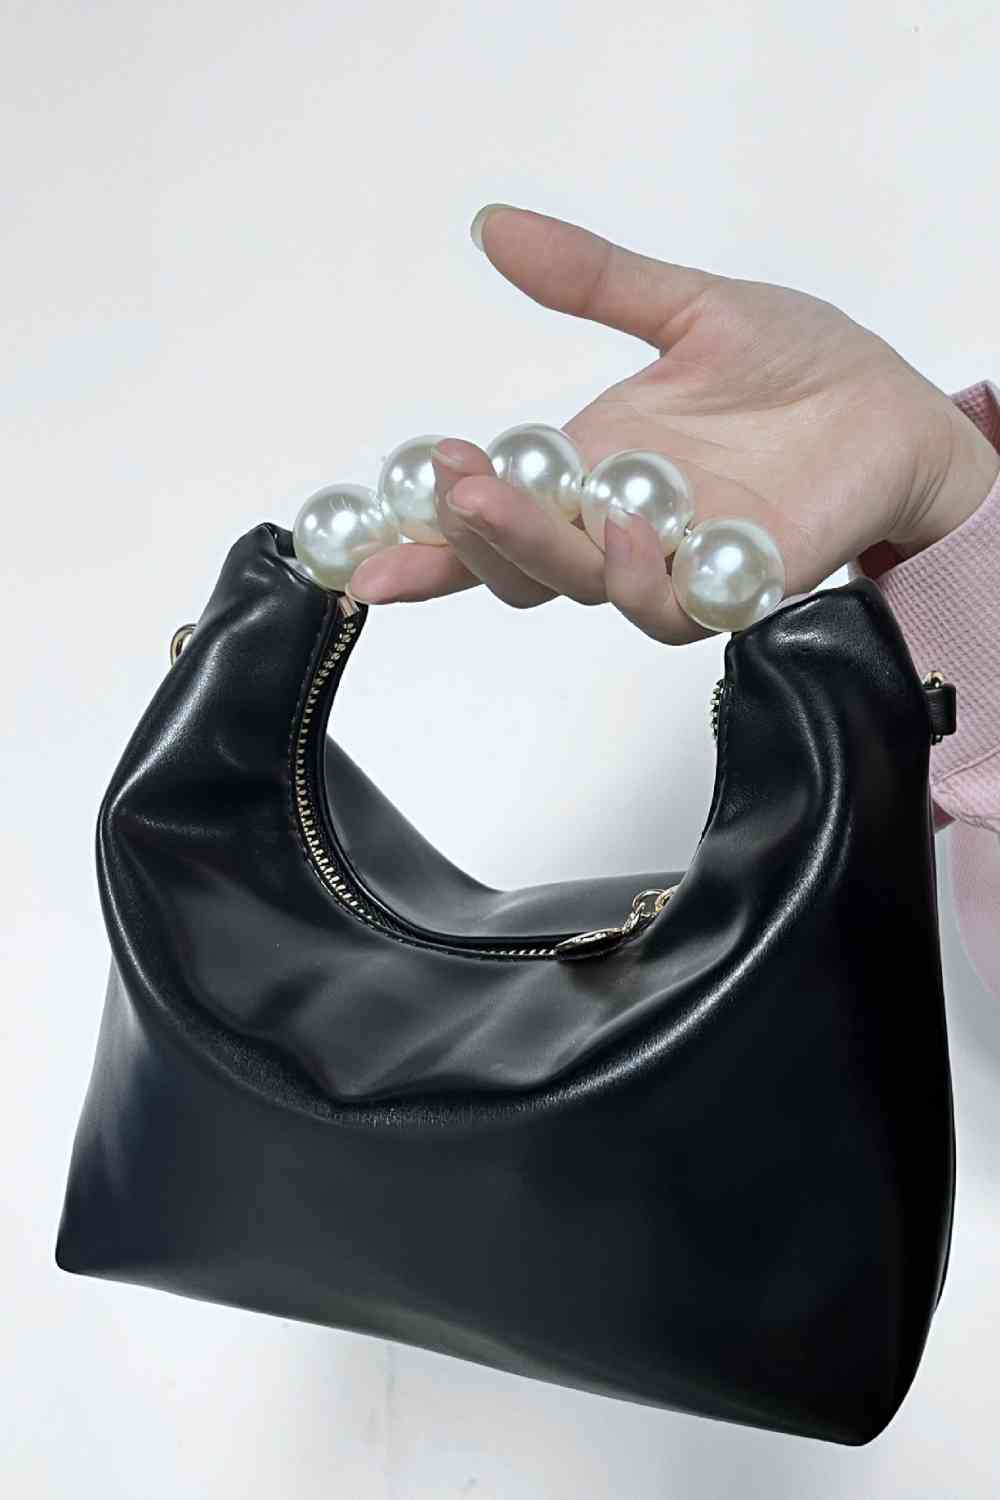 Adored PU Leather Pearl Handbag Black One Size